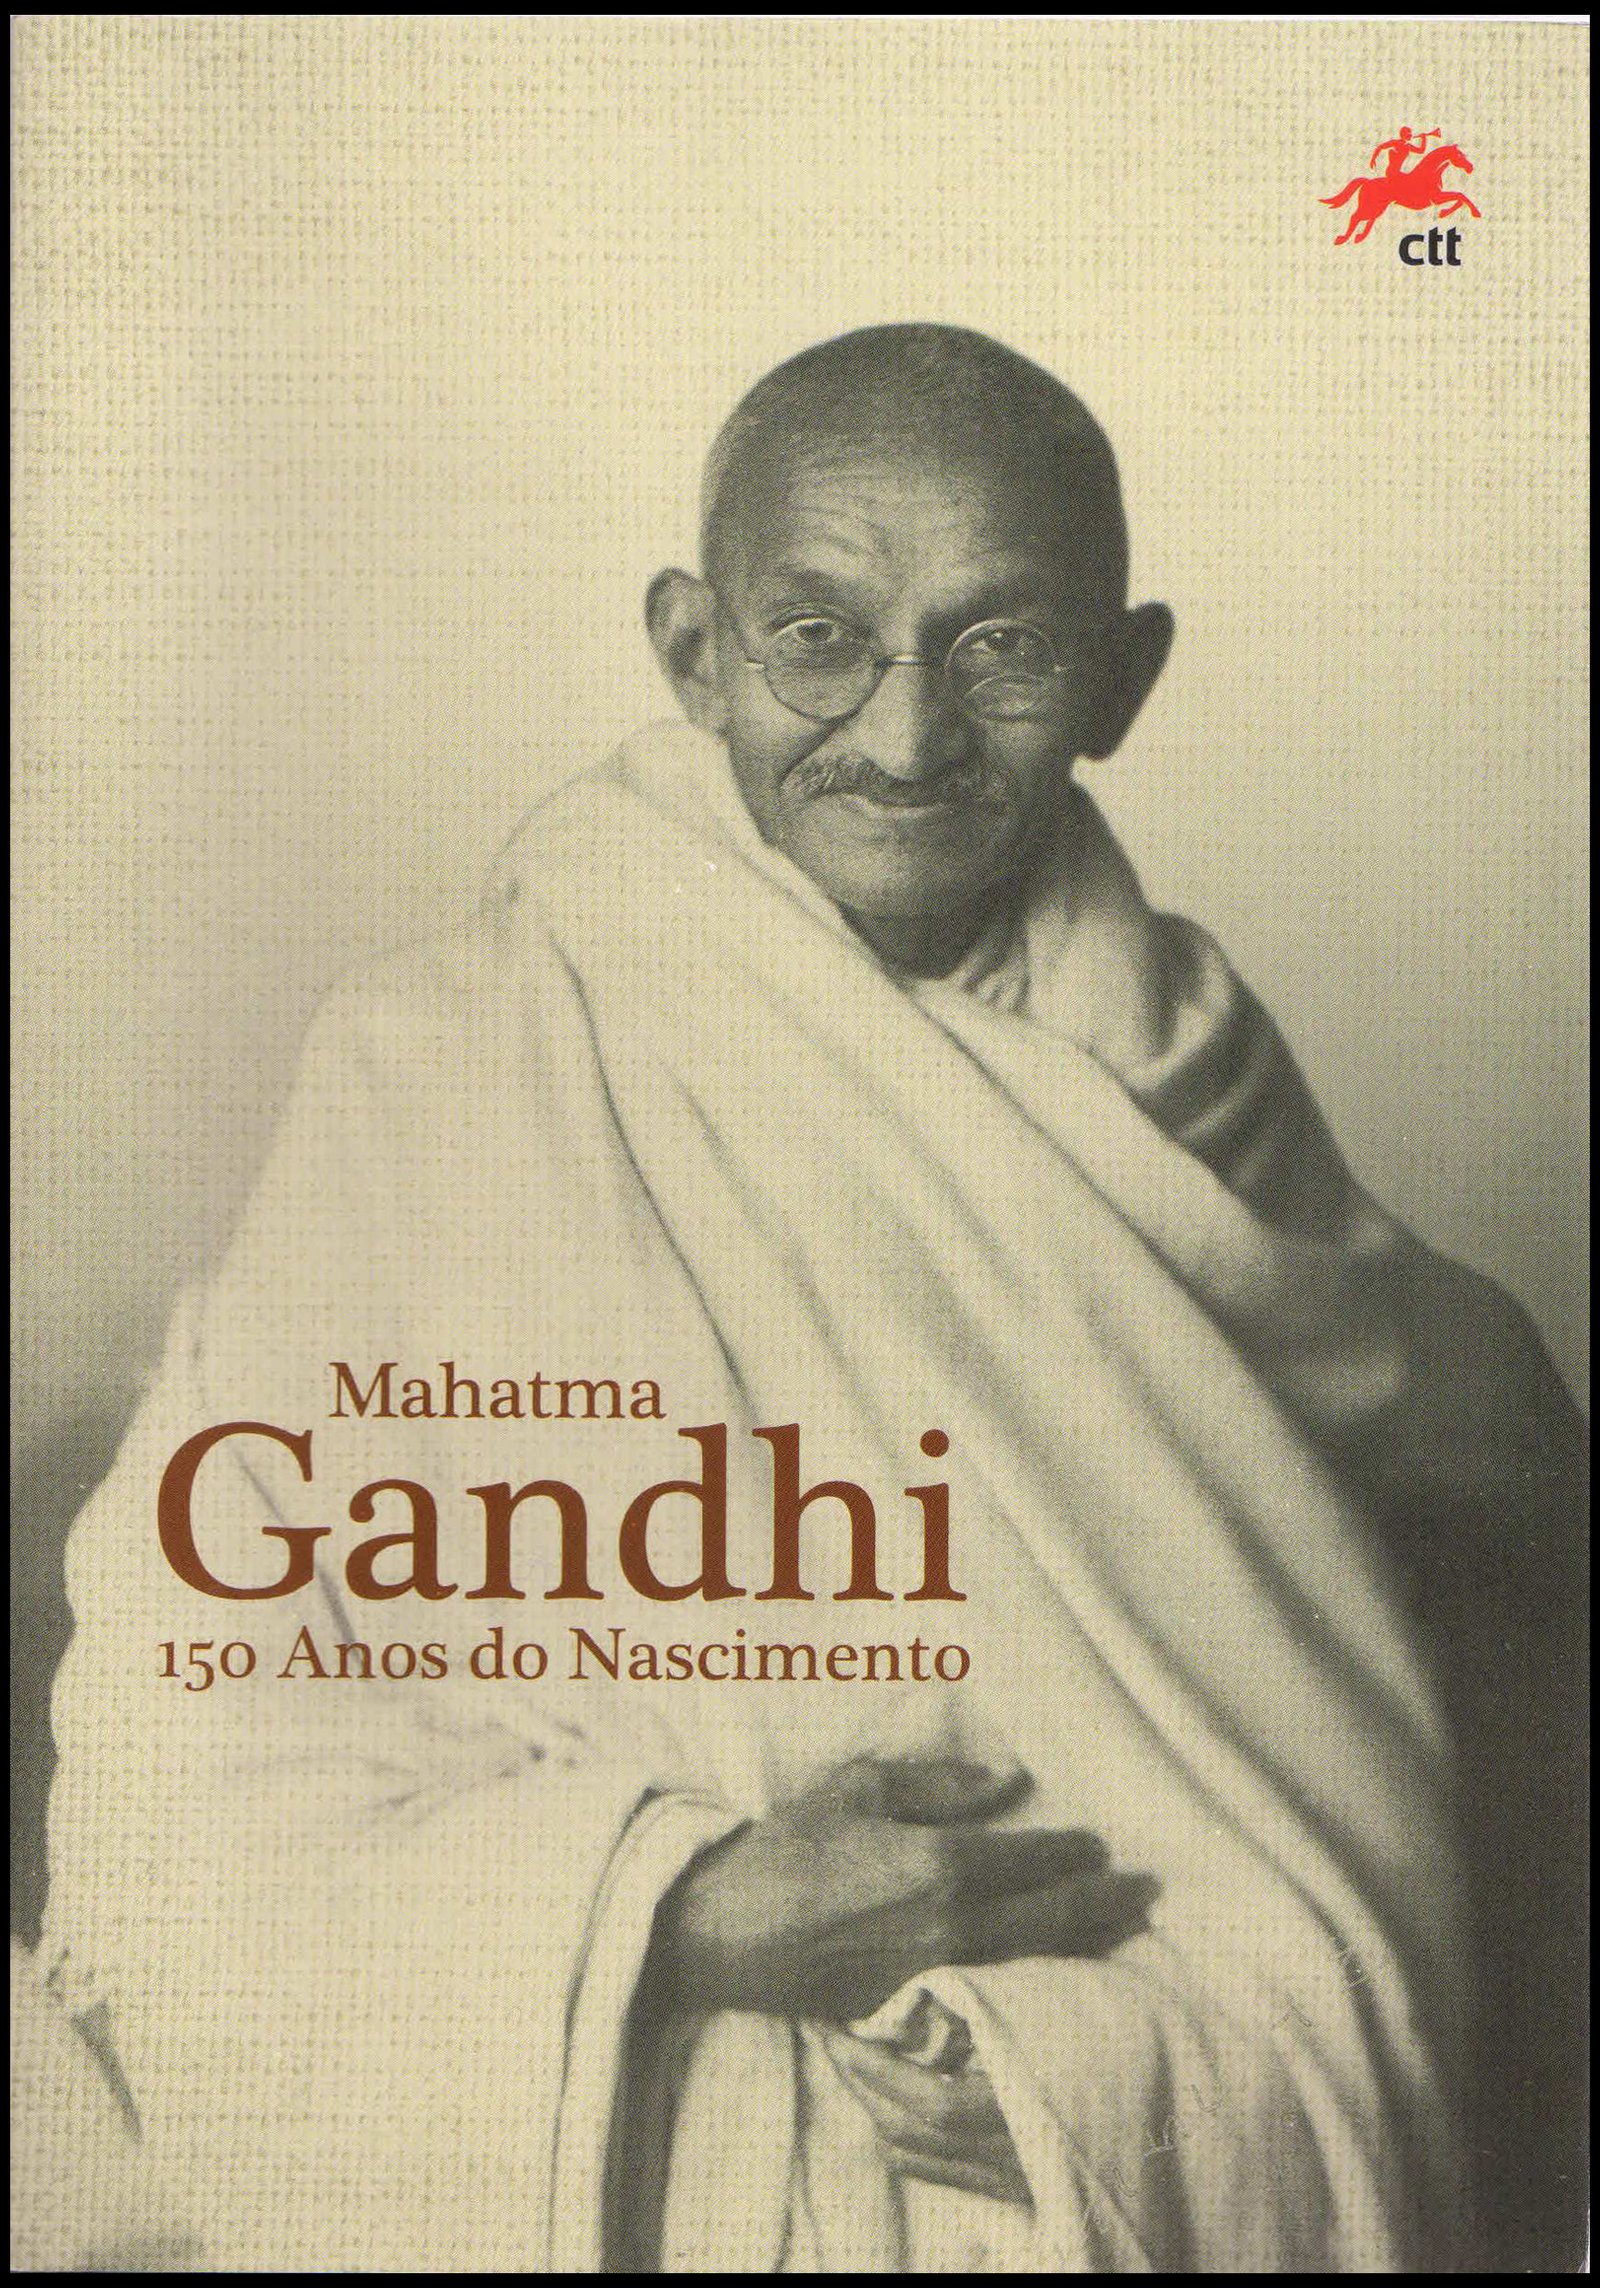 PORTUGAL 2019, 150th Birth Anniv. of Mahatma Gandhi, Special Folder with Stamp & Silk Miniature Sheet Inside